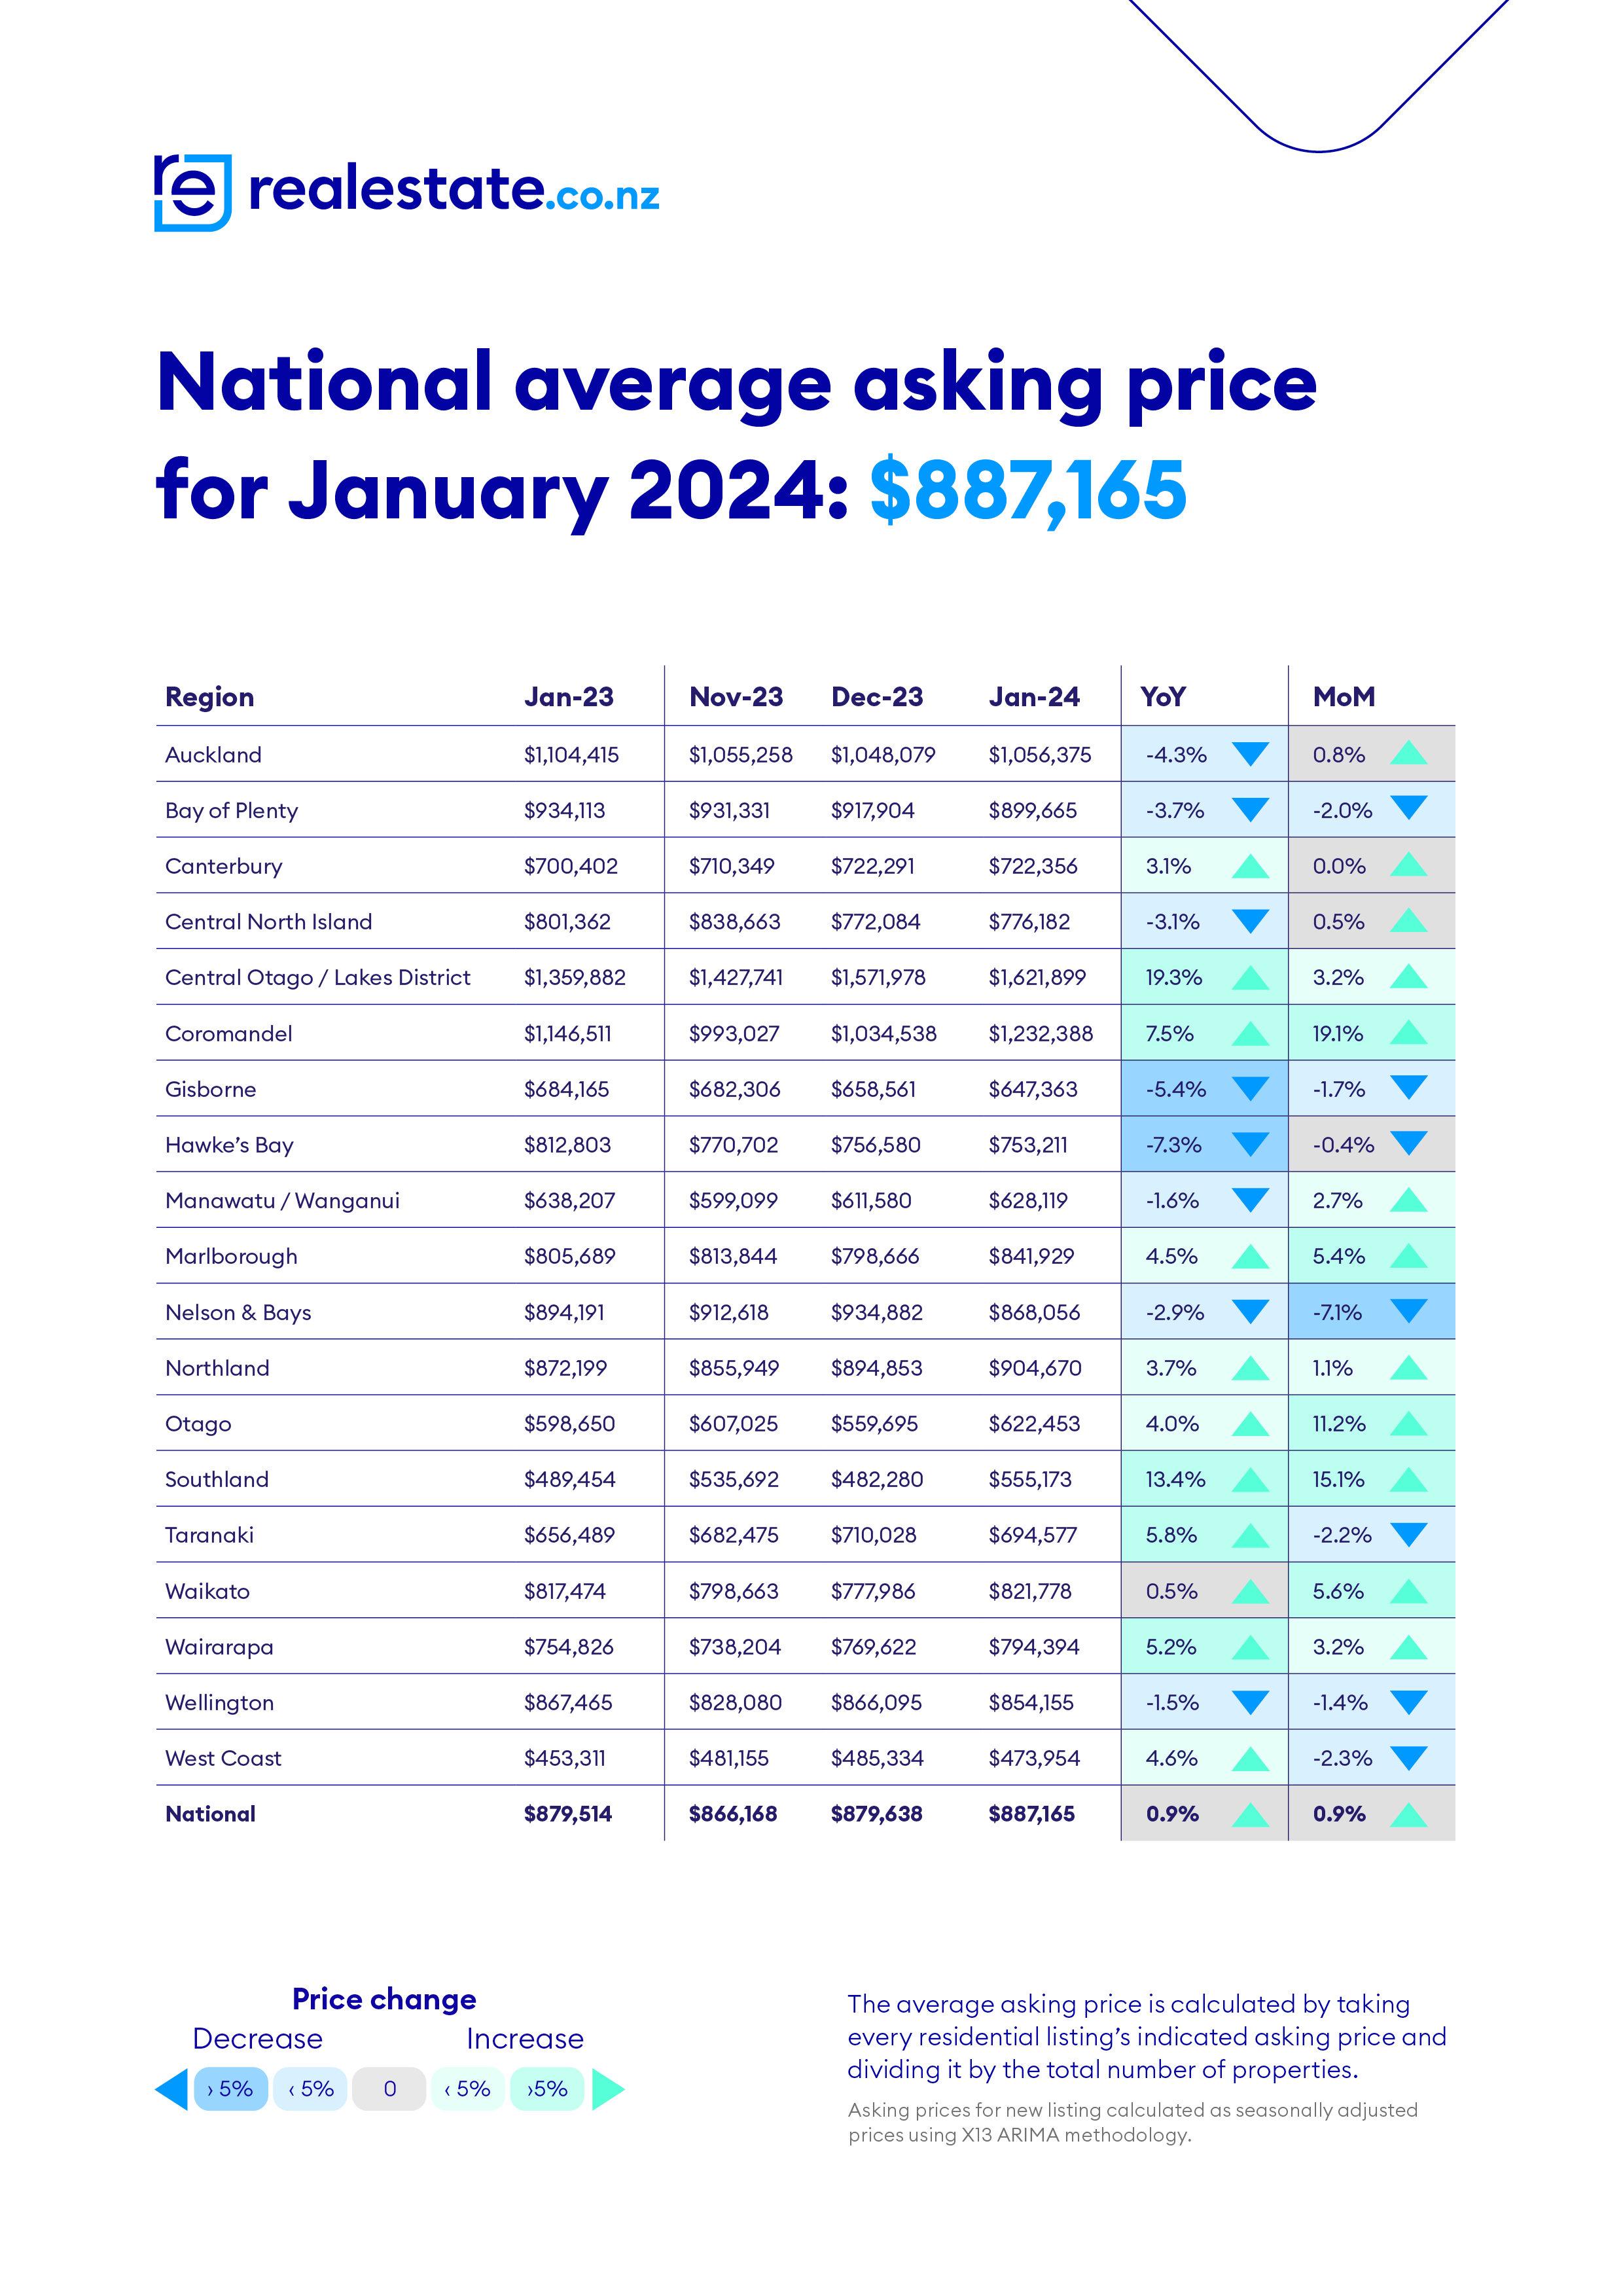 National Average Asking Price January 2023